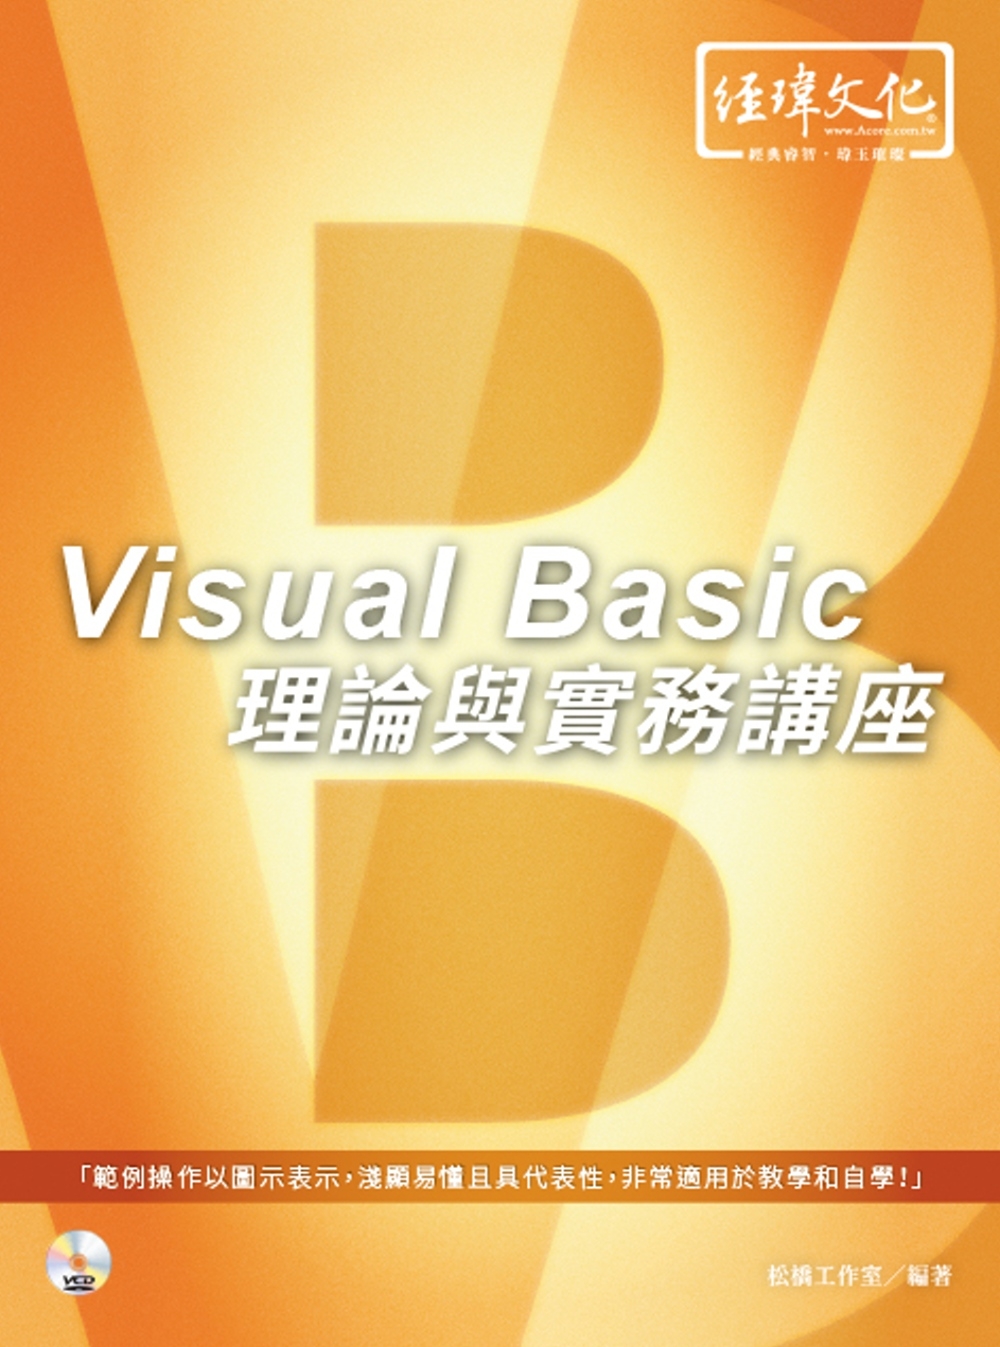 Visual Basic 理論與實務講座